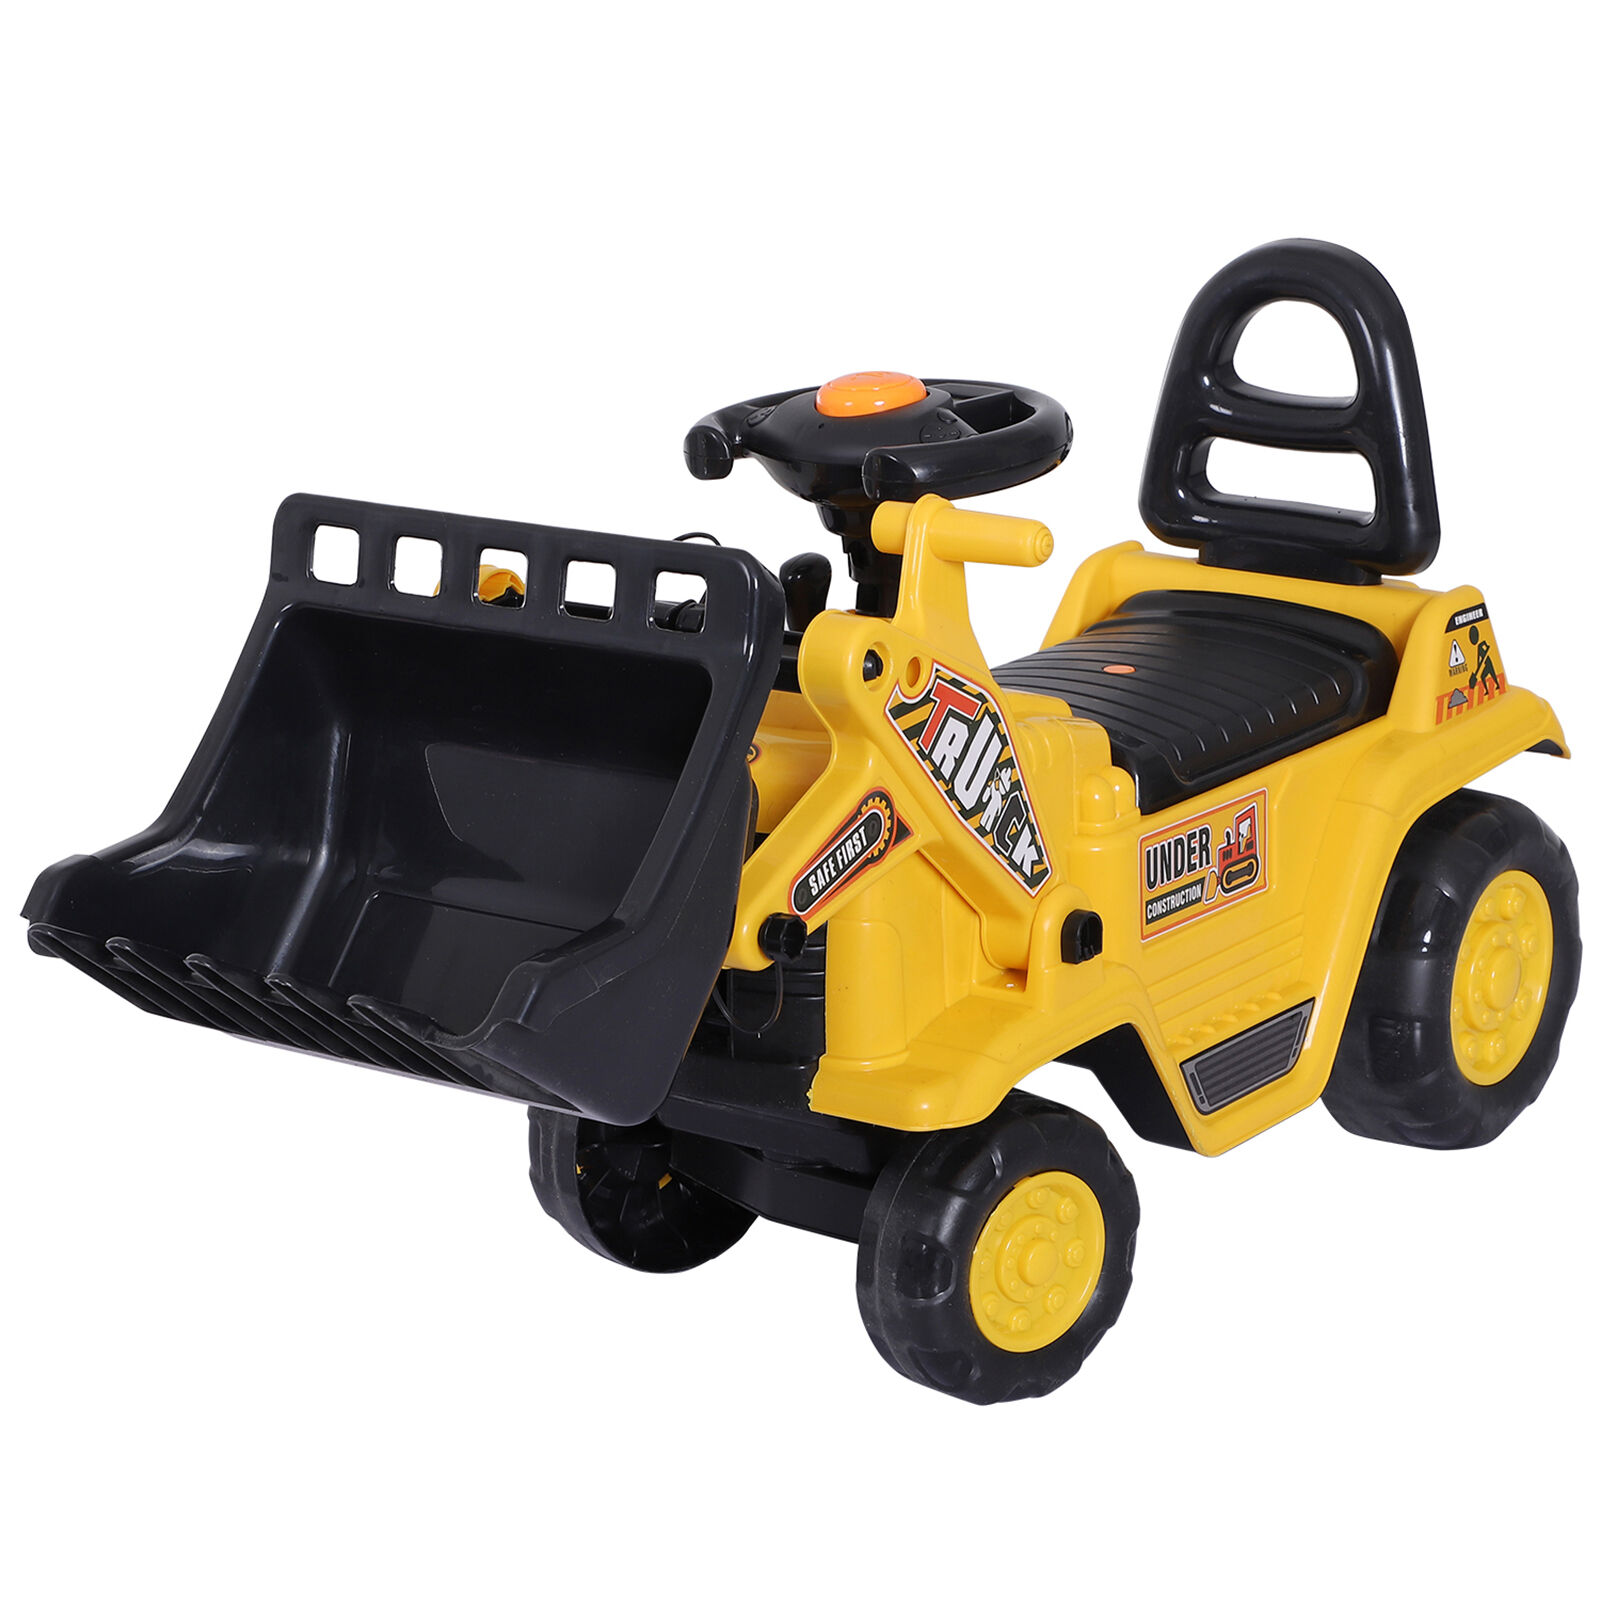 HOMCOM Kids Ride On Excavator Toy, Yellow Pull Cart Bulldozer with Bucket, Horn, Steering Wheel   Aosom.com Toddler Fun